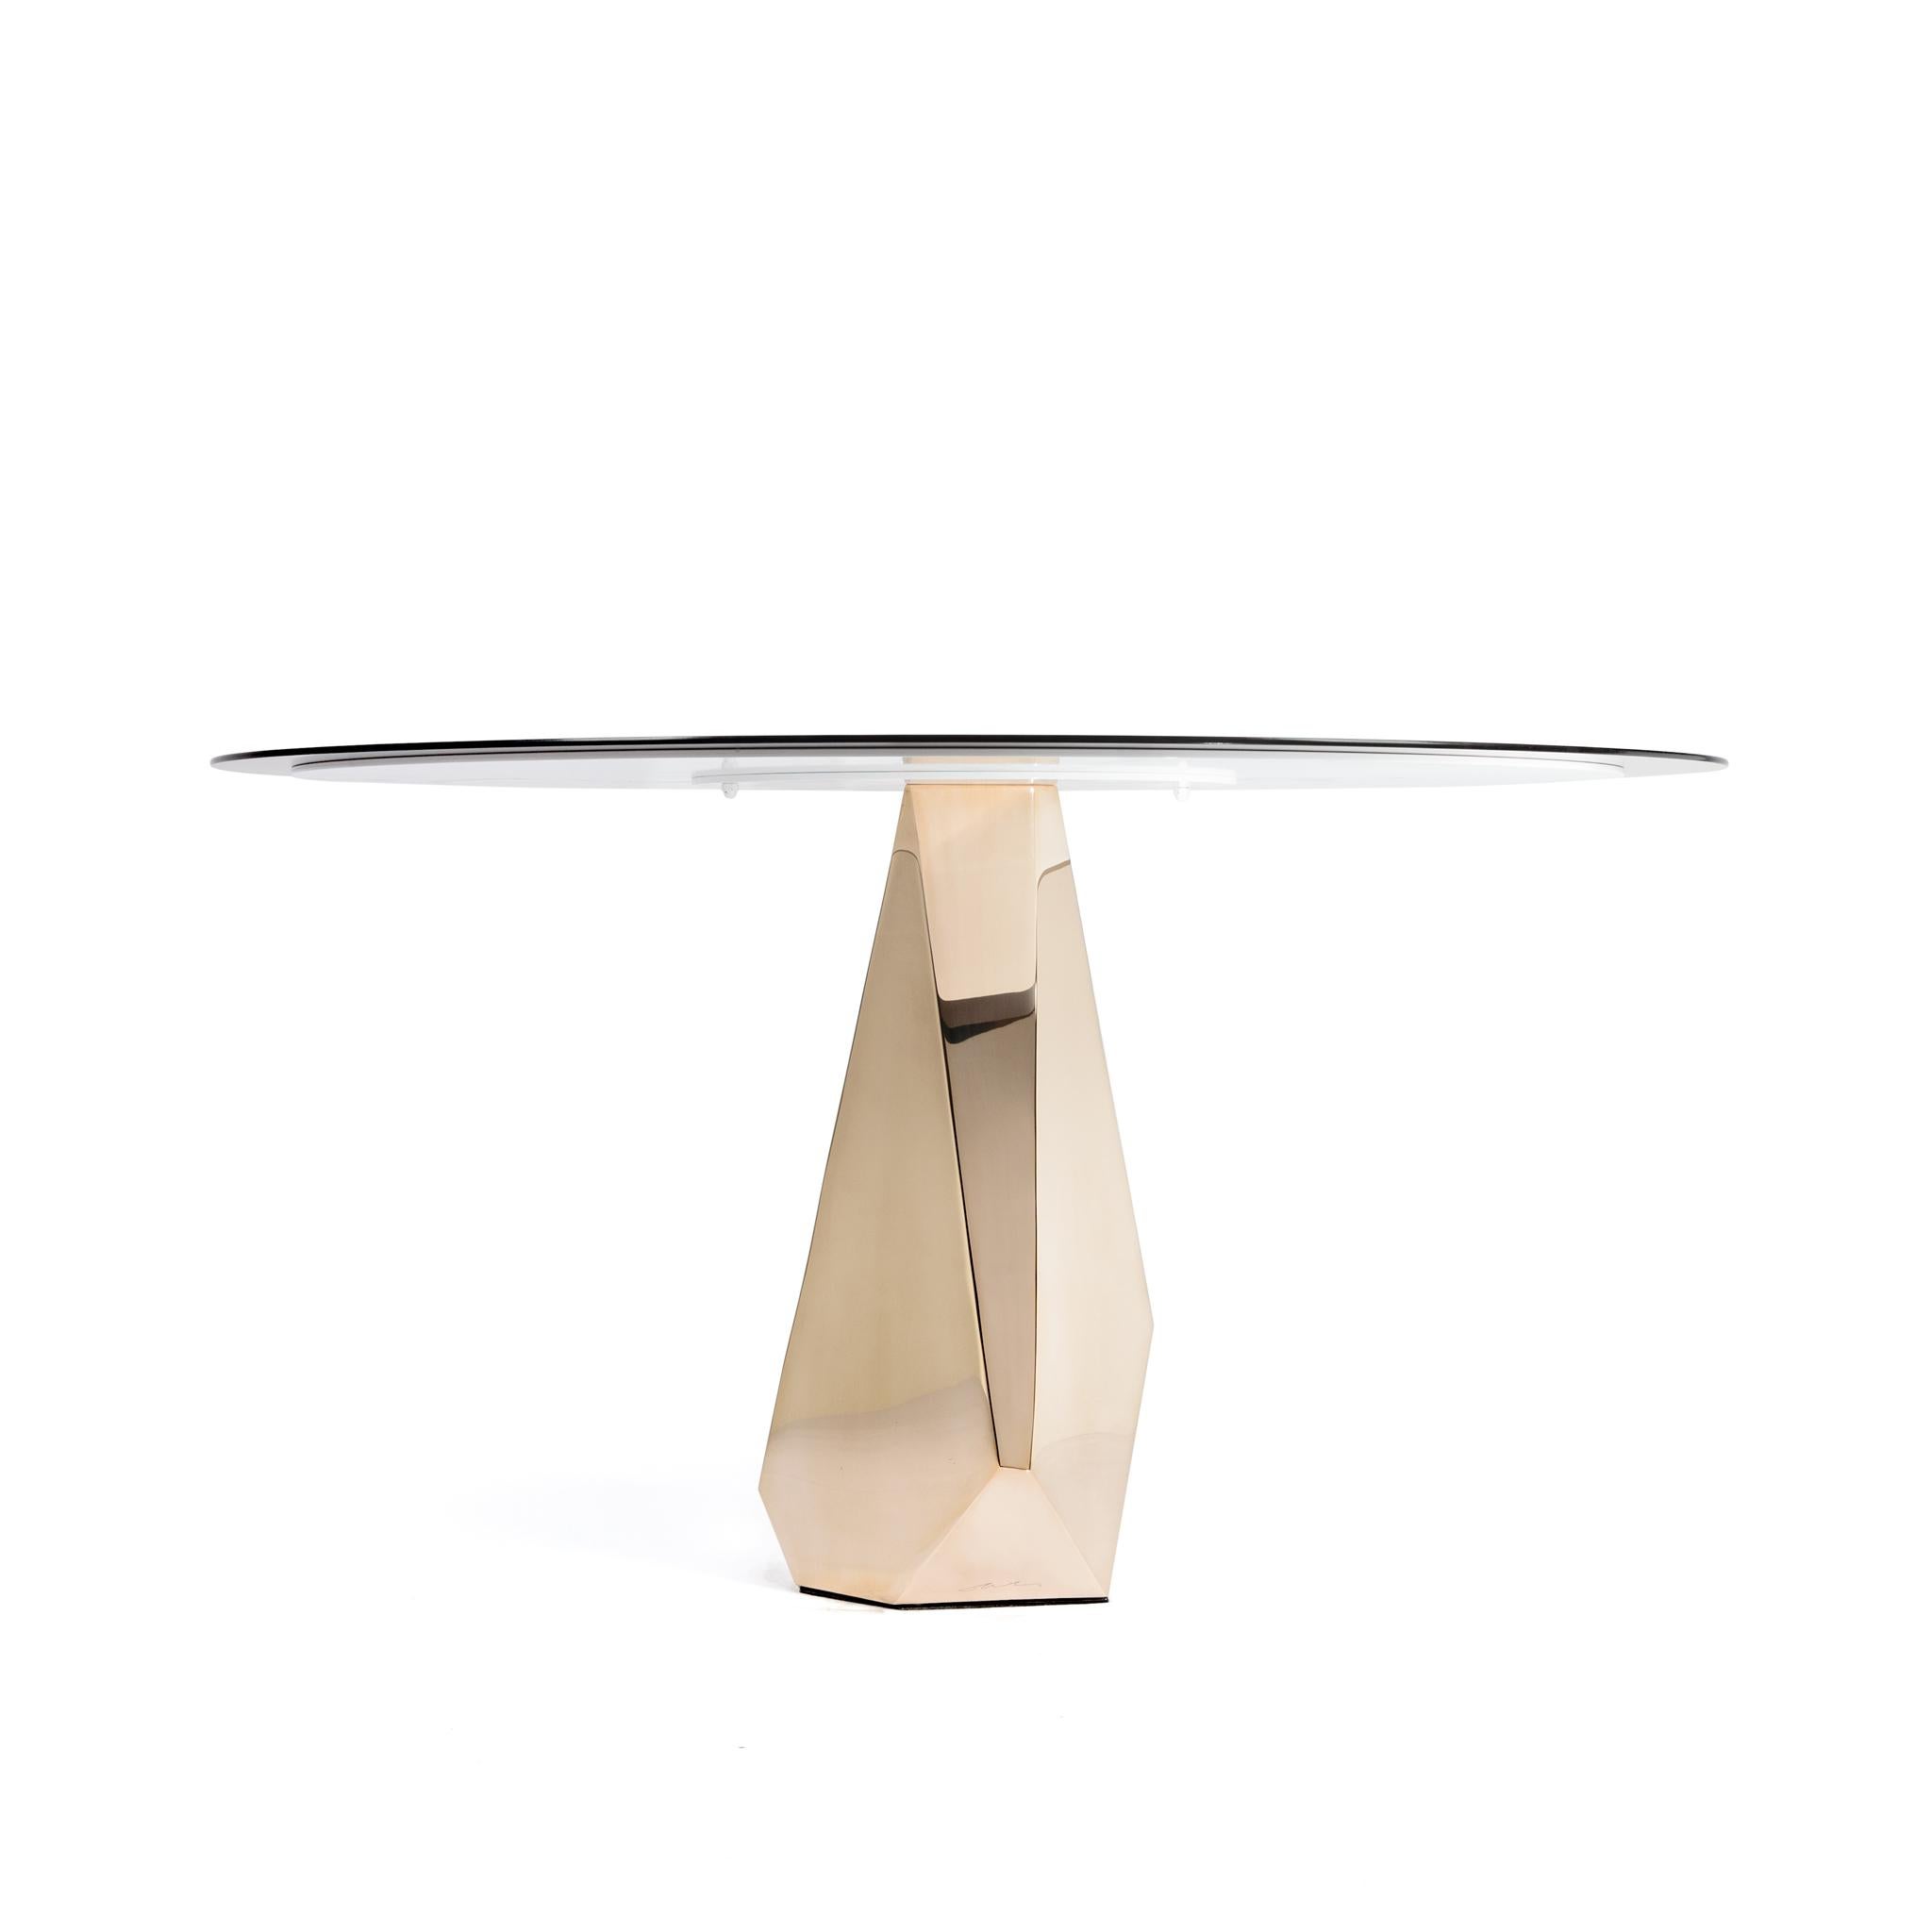 Poli Table centrale moderne de luxe en bronze véritable poli et plateau en verre fumé en miroir en vente